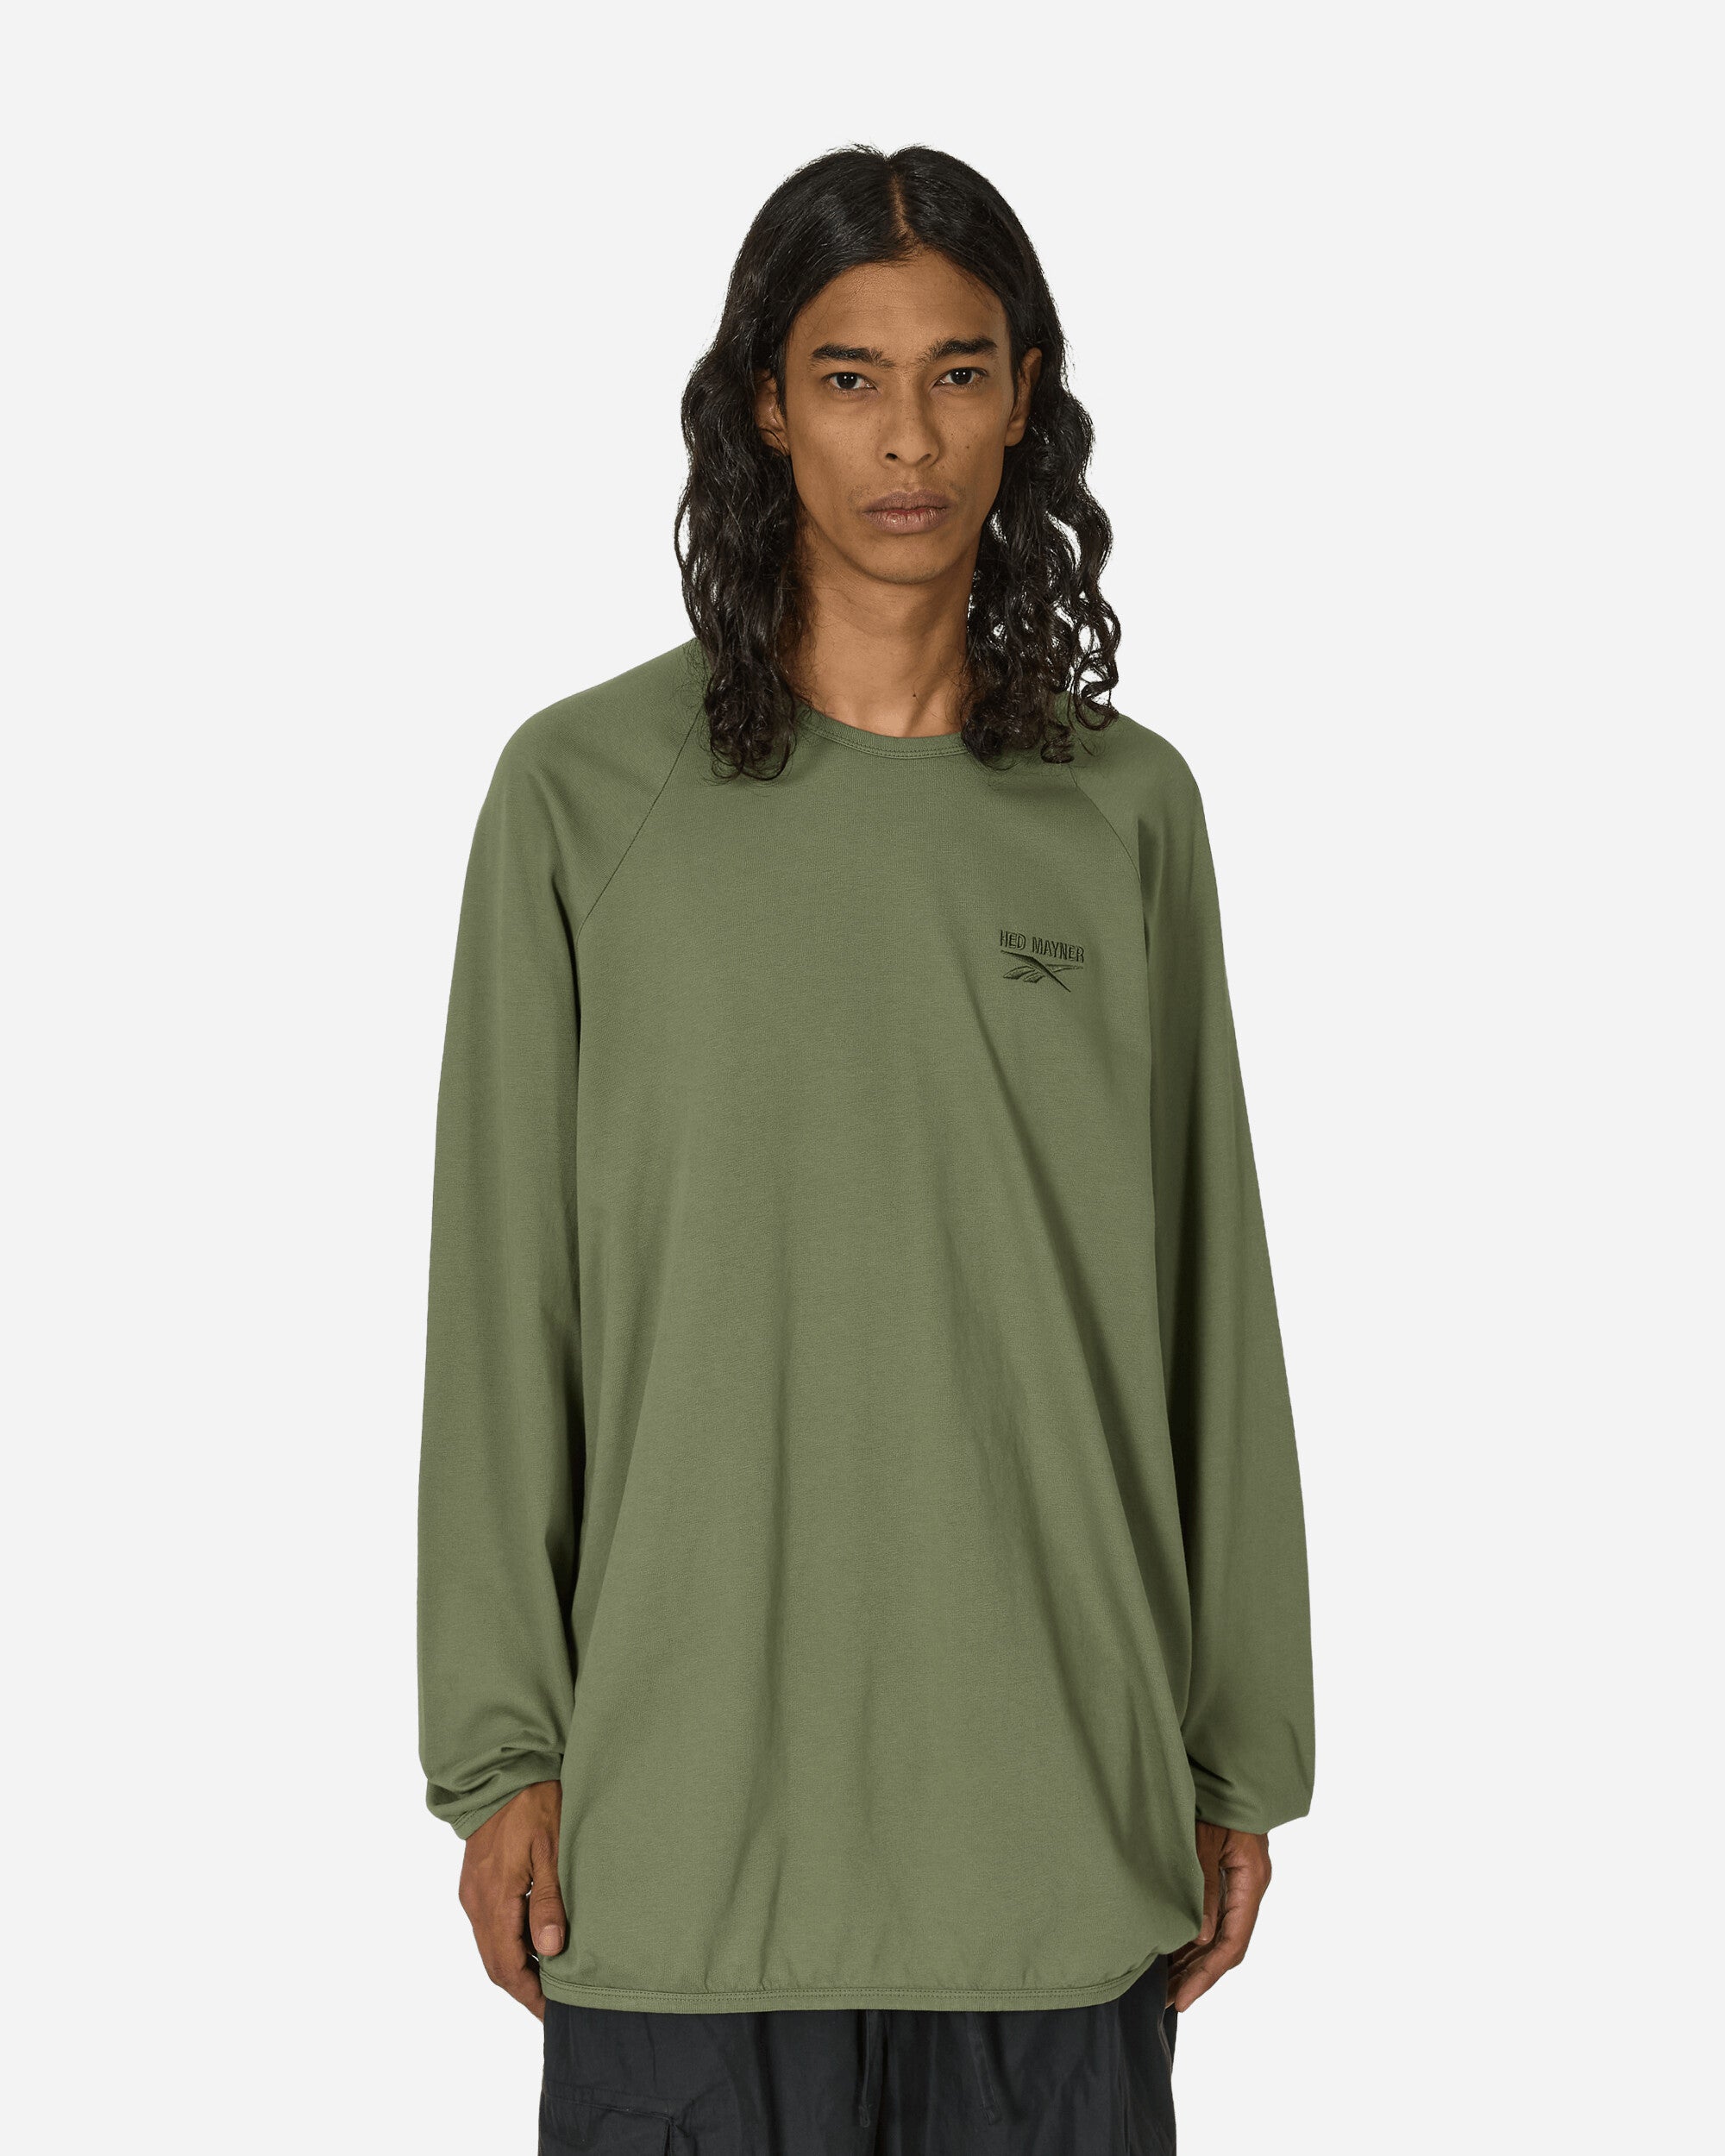 Reebok Hed Mayner Oversized Raglan Longsleeve T-shirt Army In Green